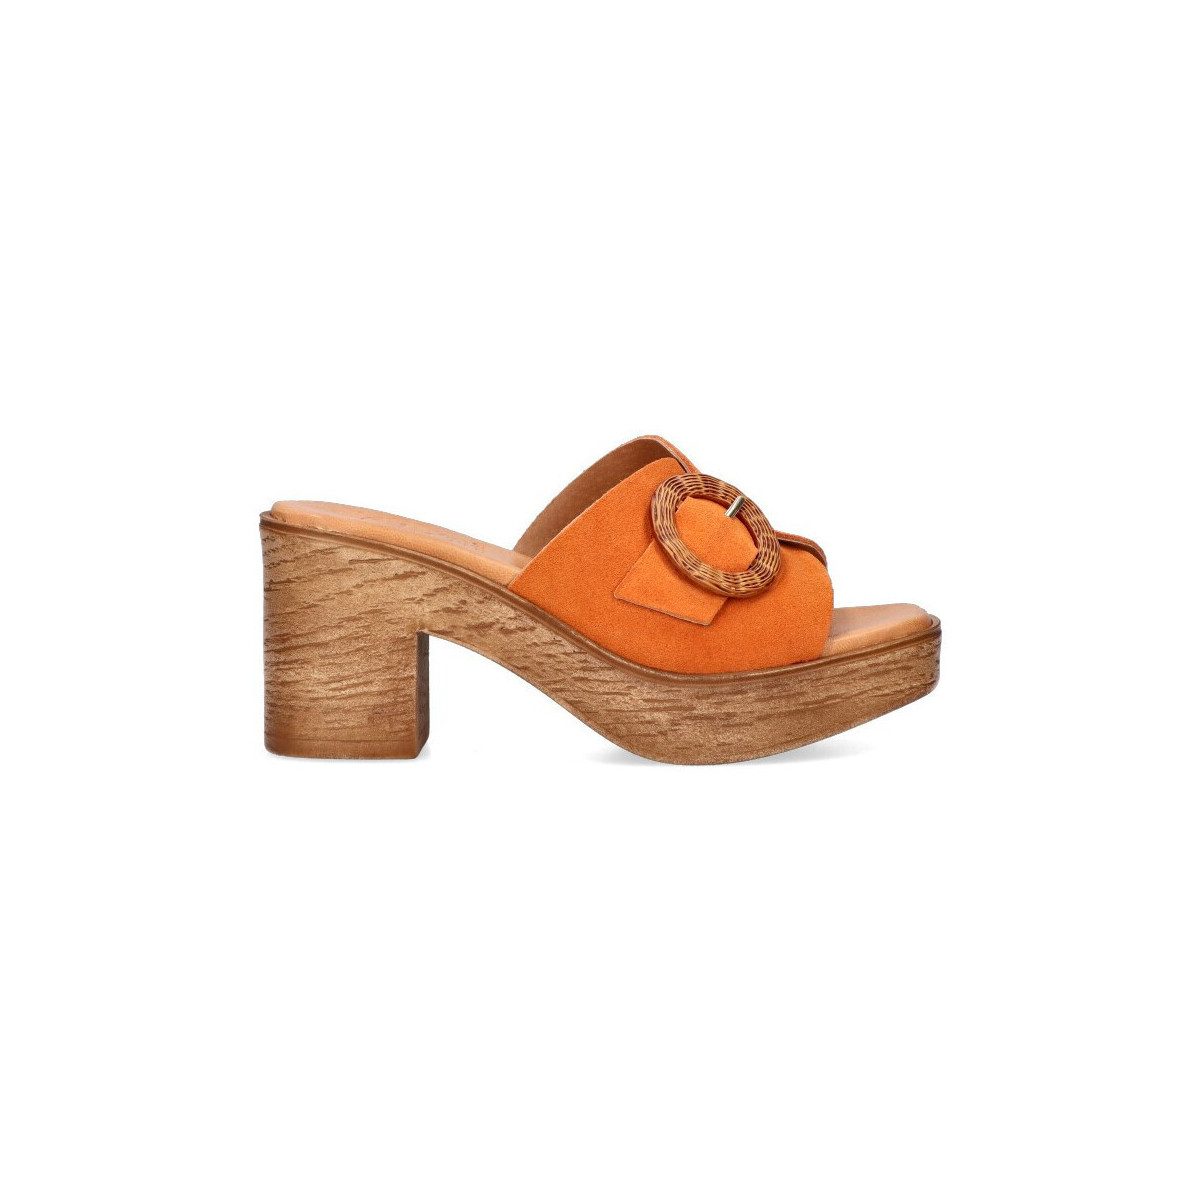 Schuhe Damen Sandalen / Sandaletten Luna Collection 74732 Orange